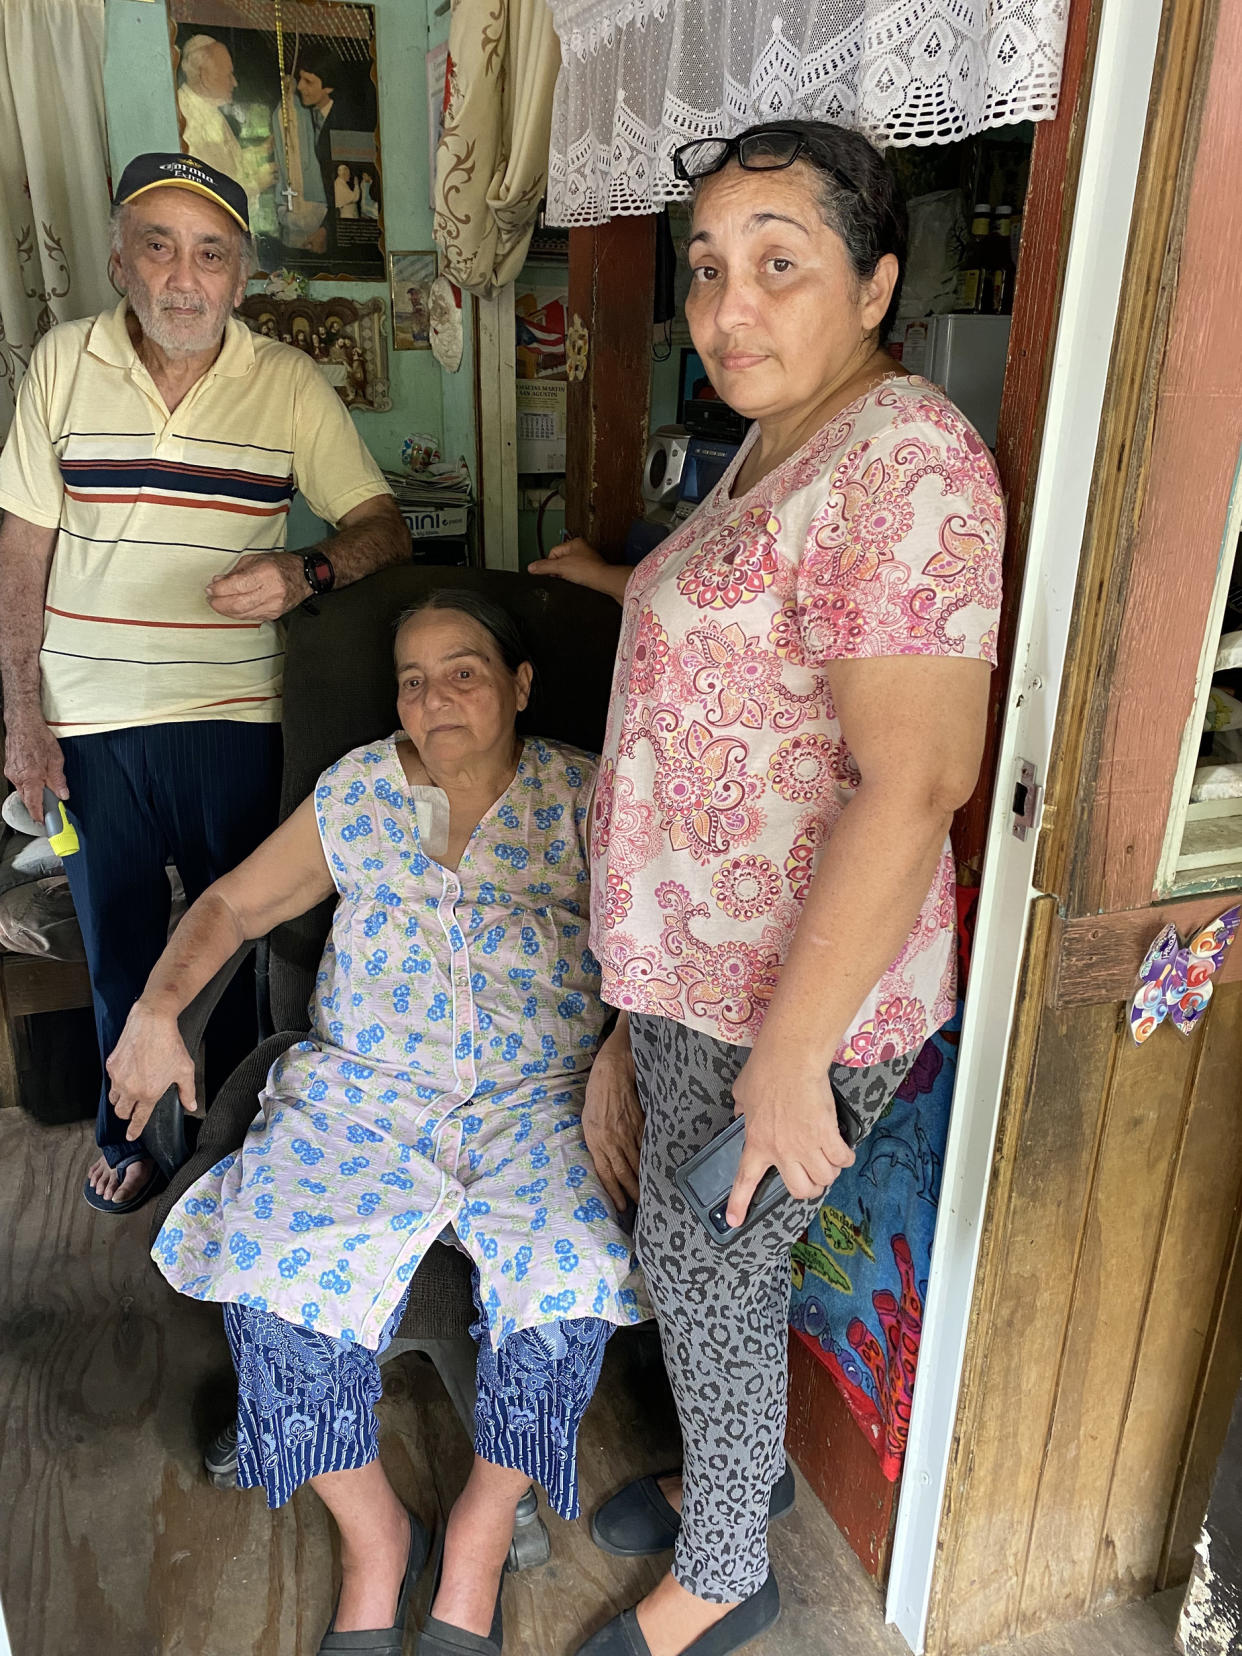 Carmen Cruz Vázquez, right, with her parents, Carmen Vázquez Ramos and Juan Cruz Camacho, in their home in San Germán, Puerto Rico. (Daniella Silva / NBC News)